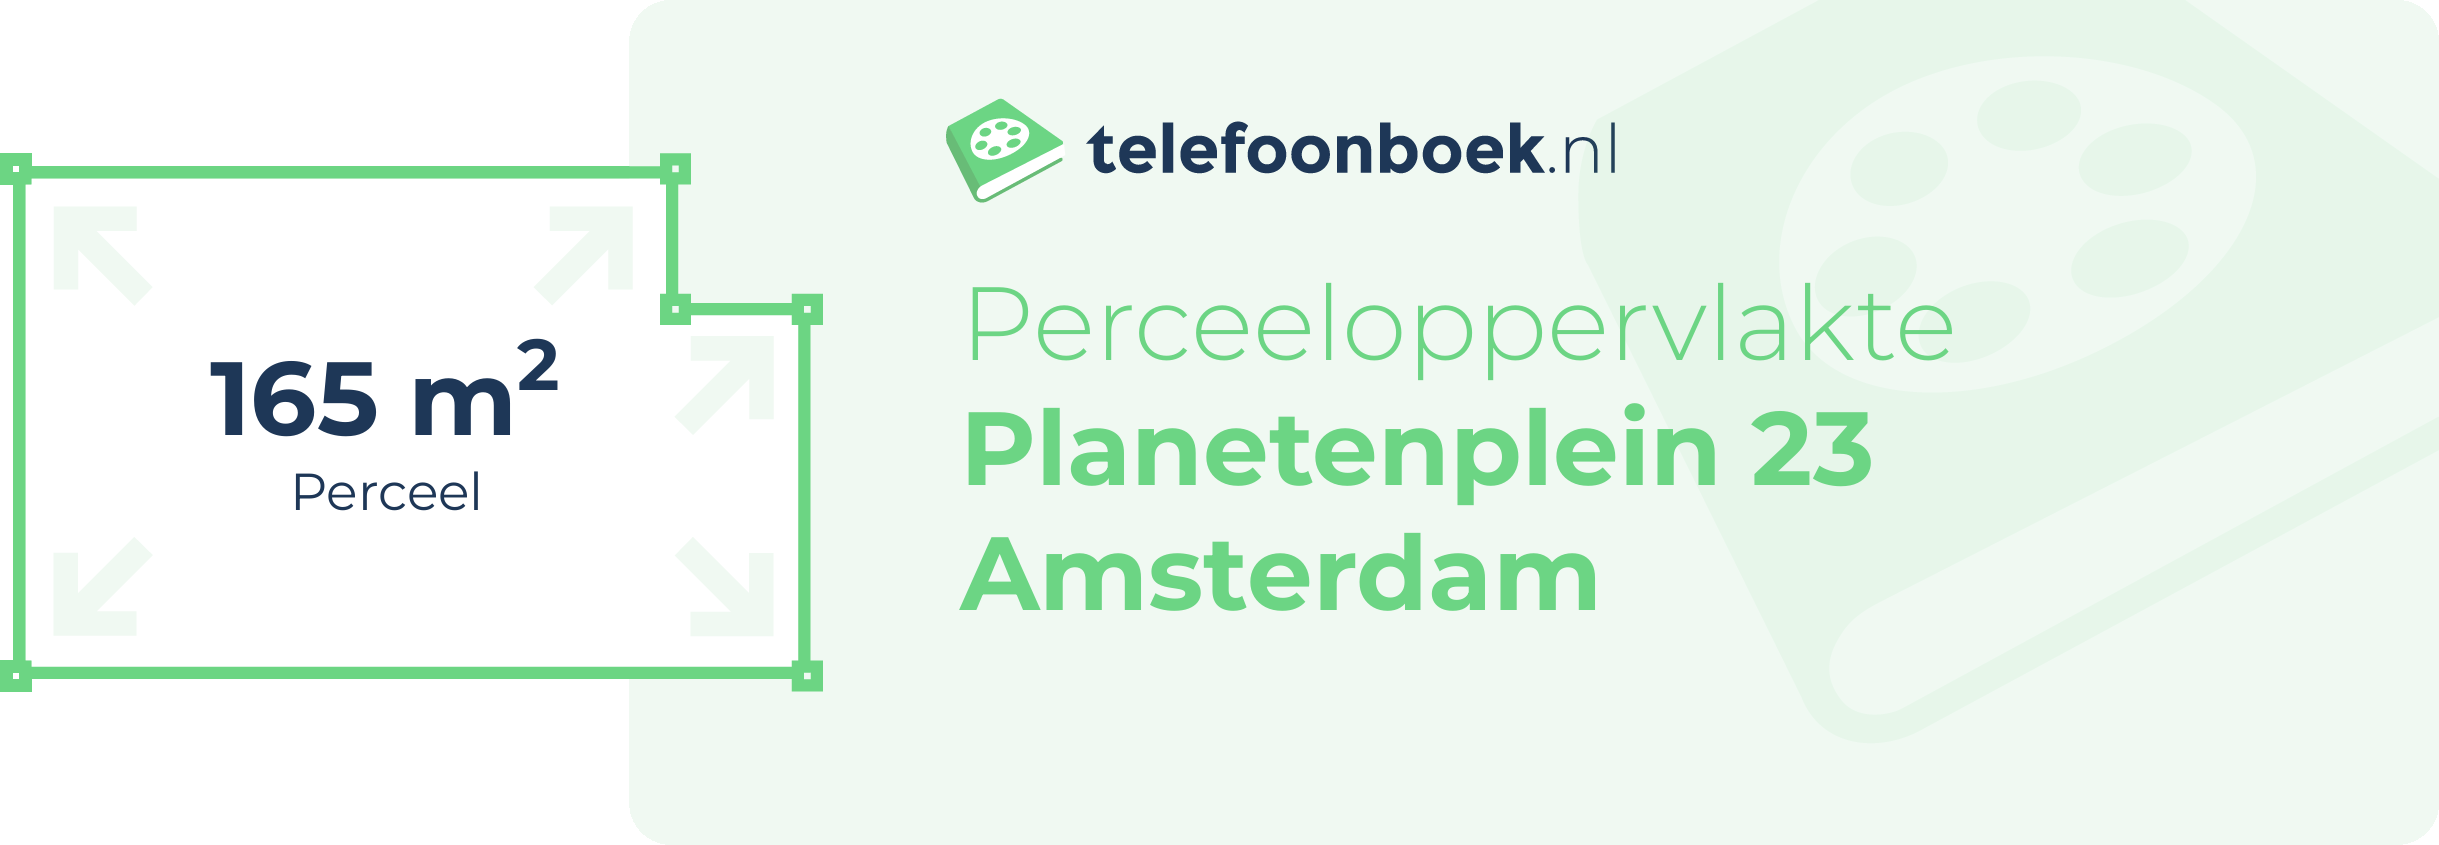 Perceeloppervlakte Planetenplein 23 Amsterdam